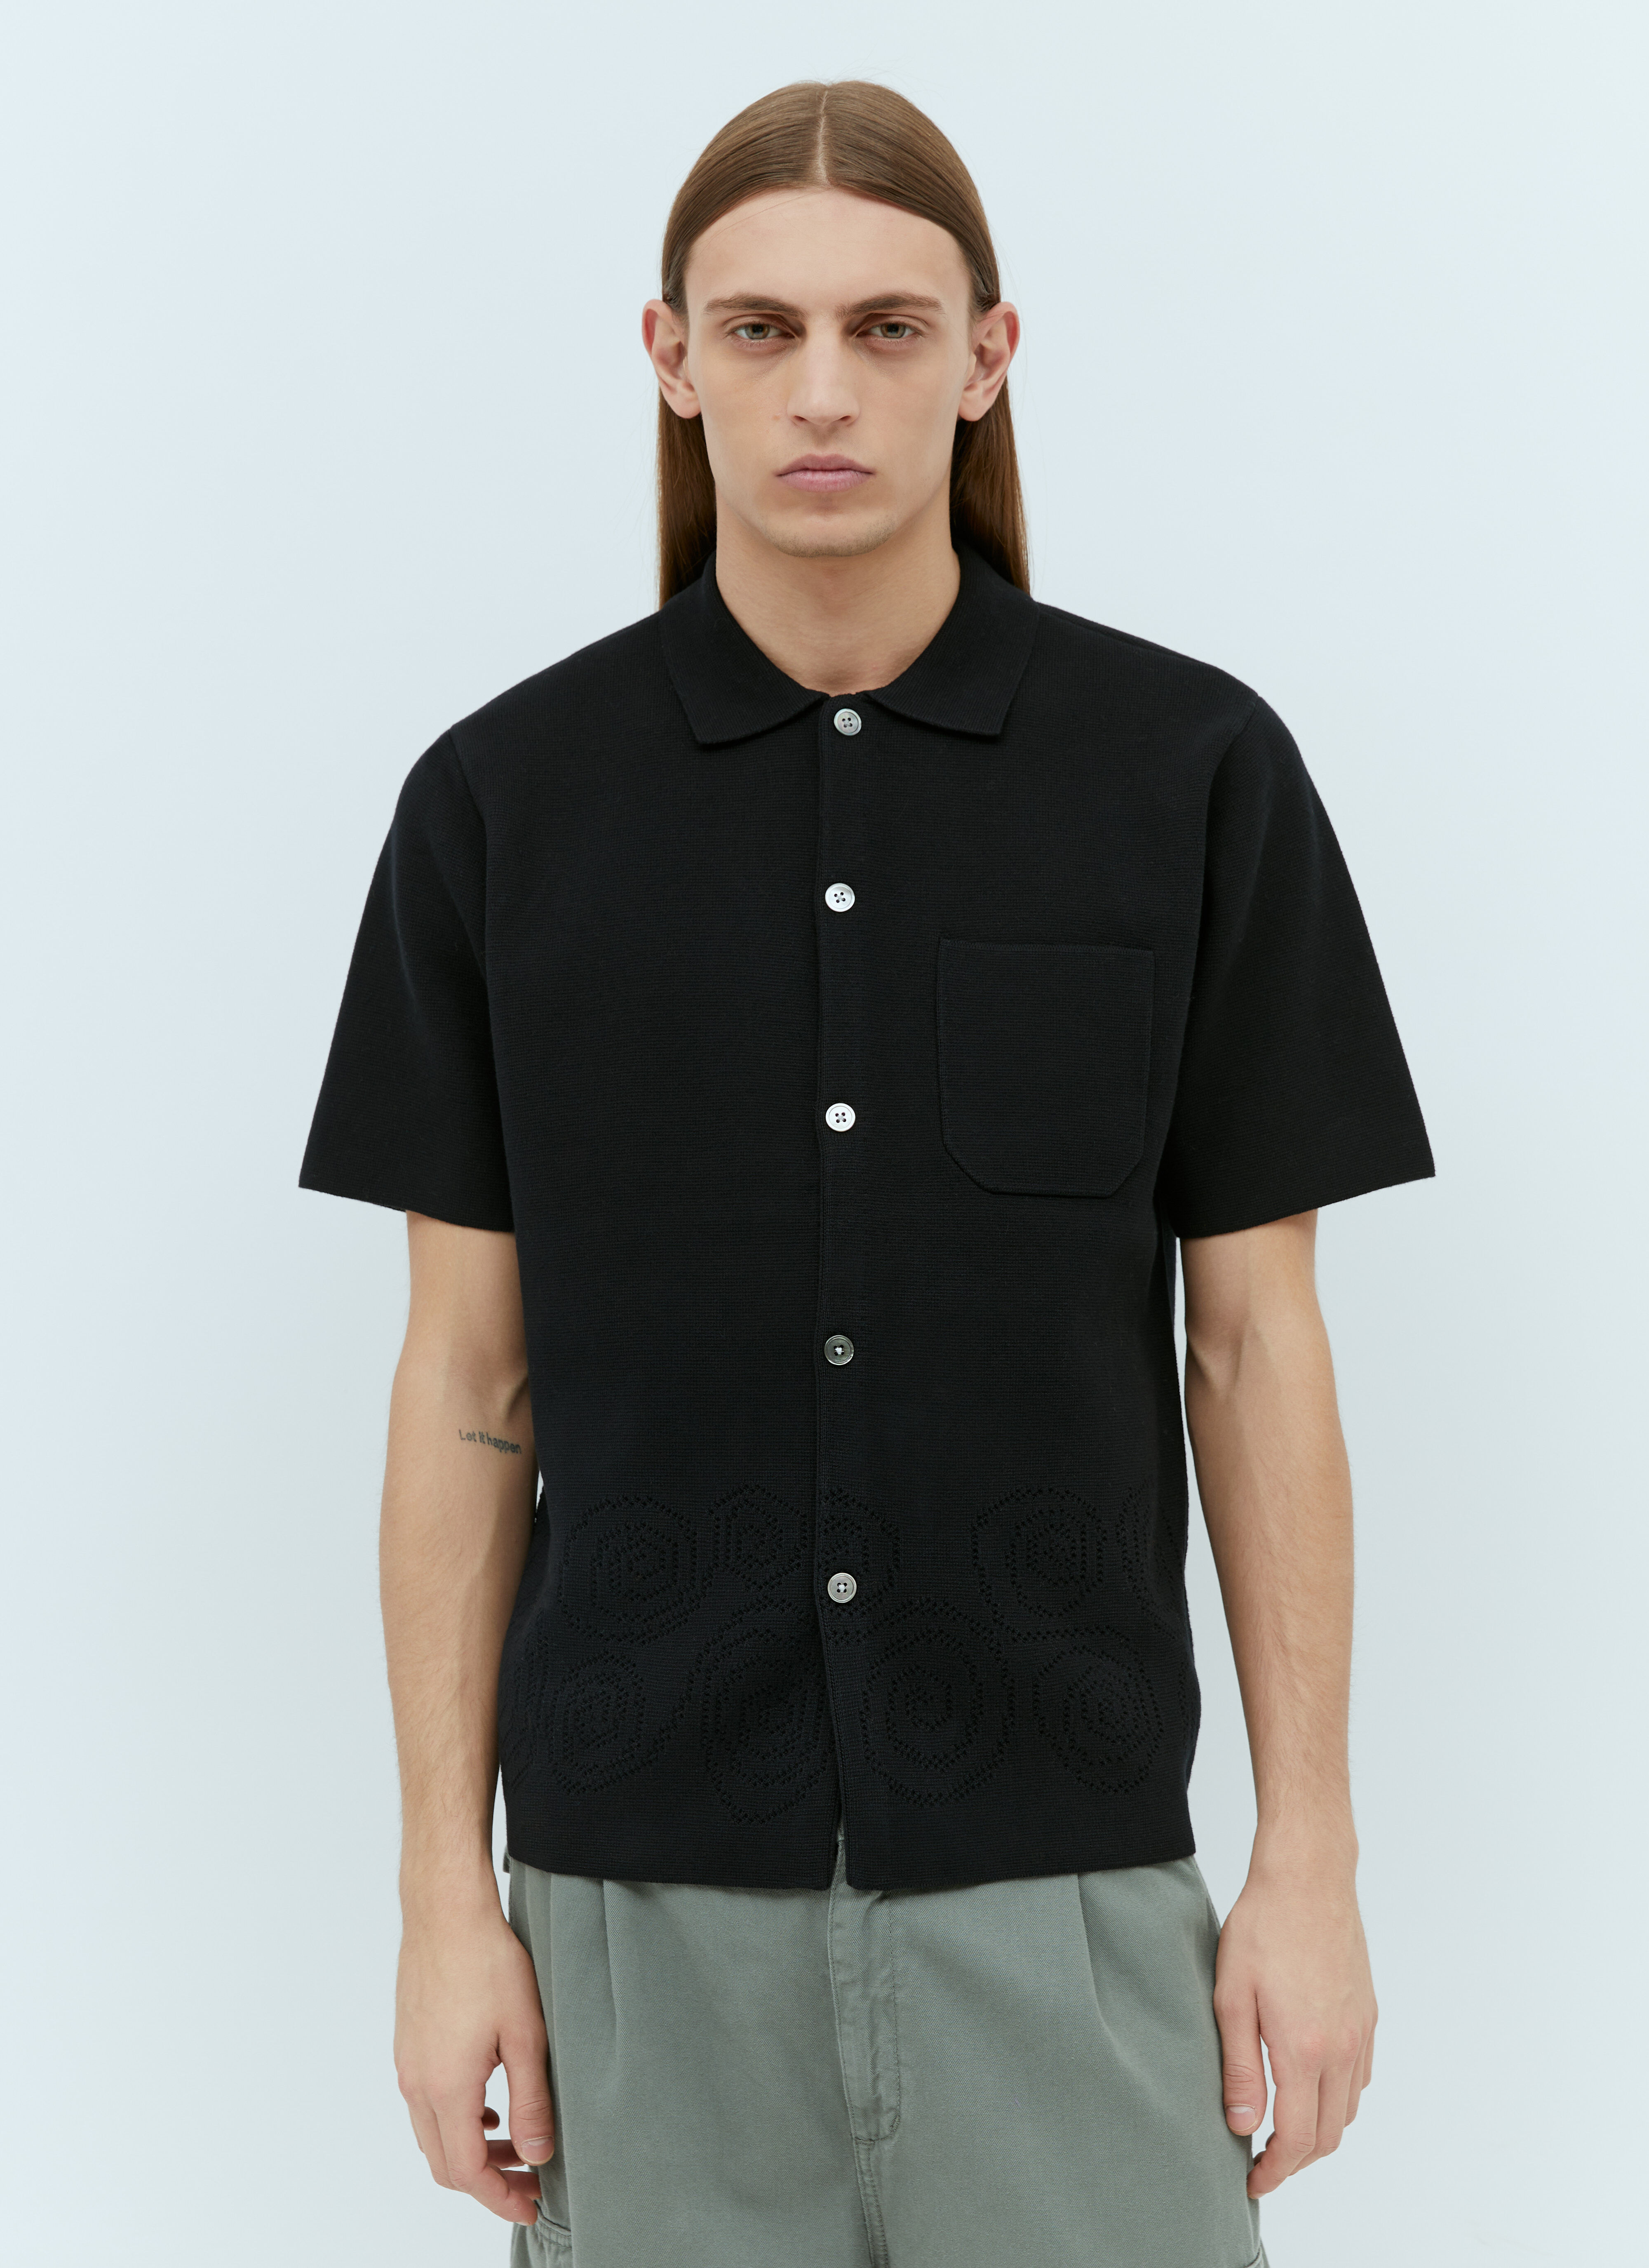 Stüssy Men's Perforated Swirl-Knit Shirt in Black | LN-CC®